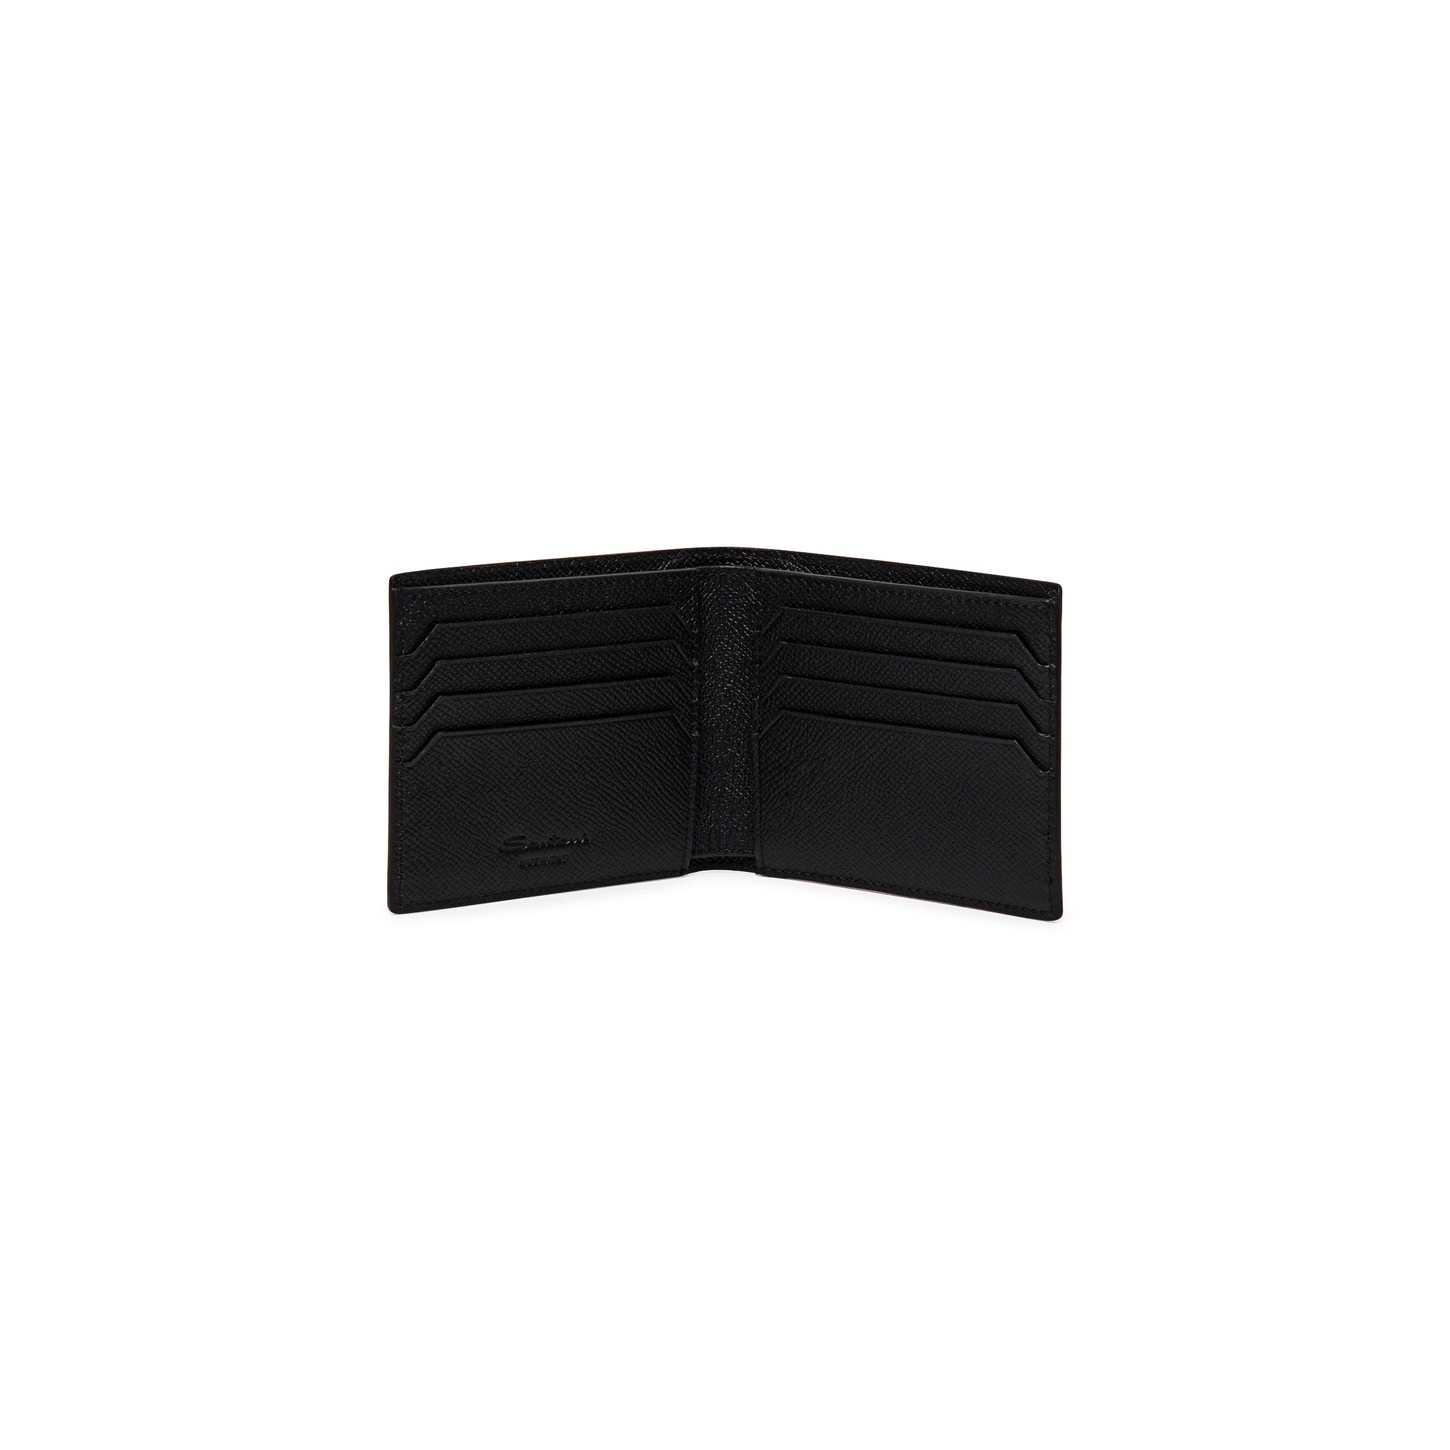 Black saffiano leather wallet - 3